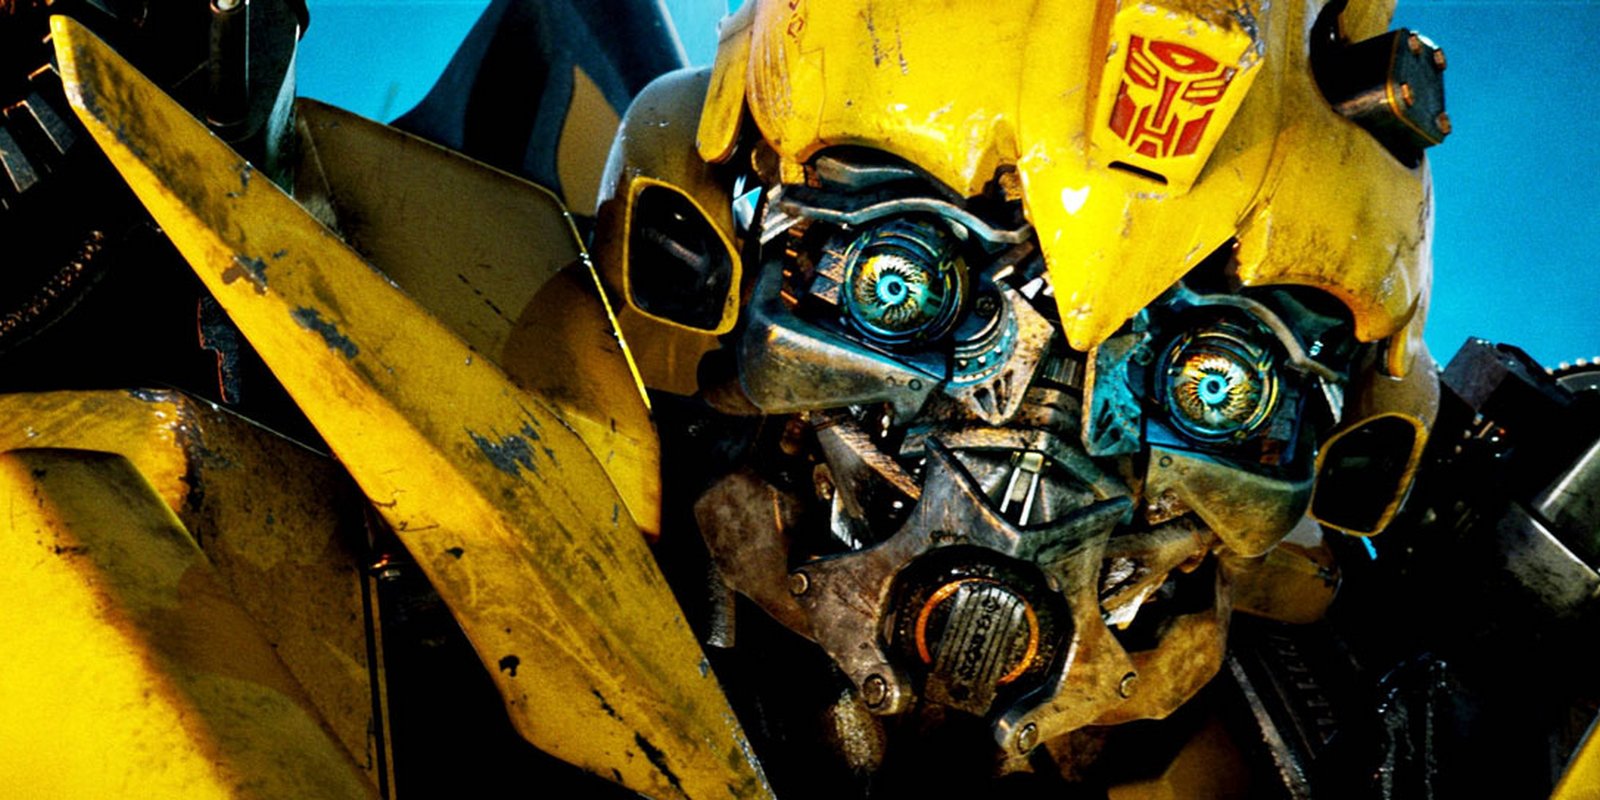 Transformers 2 - Die Rache